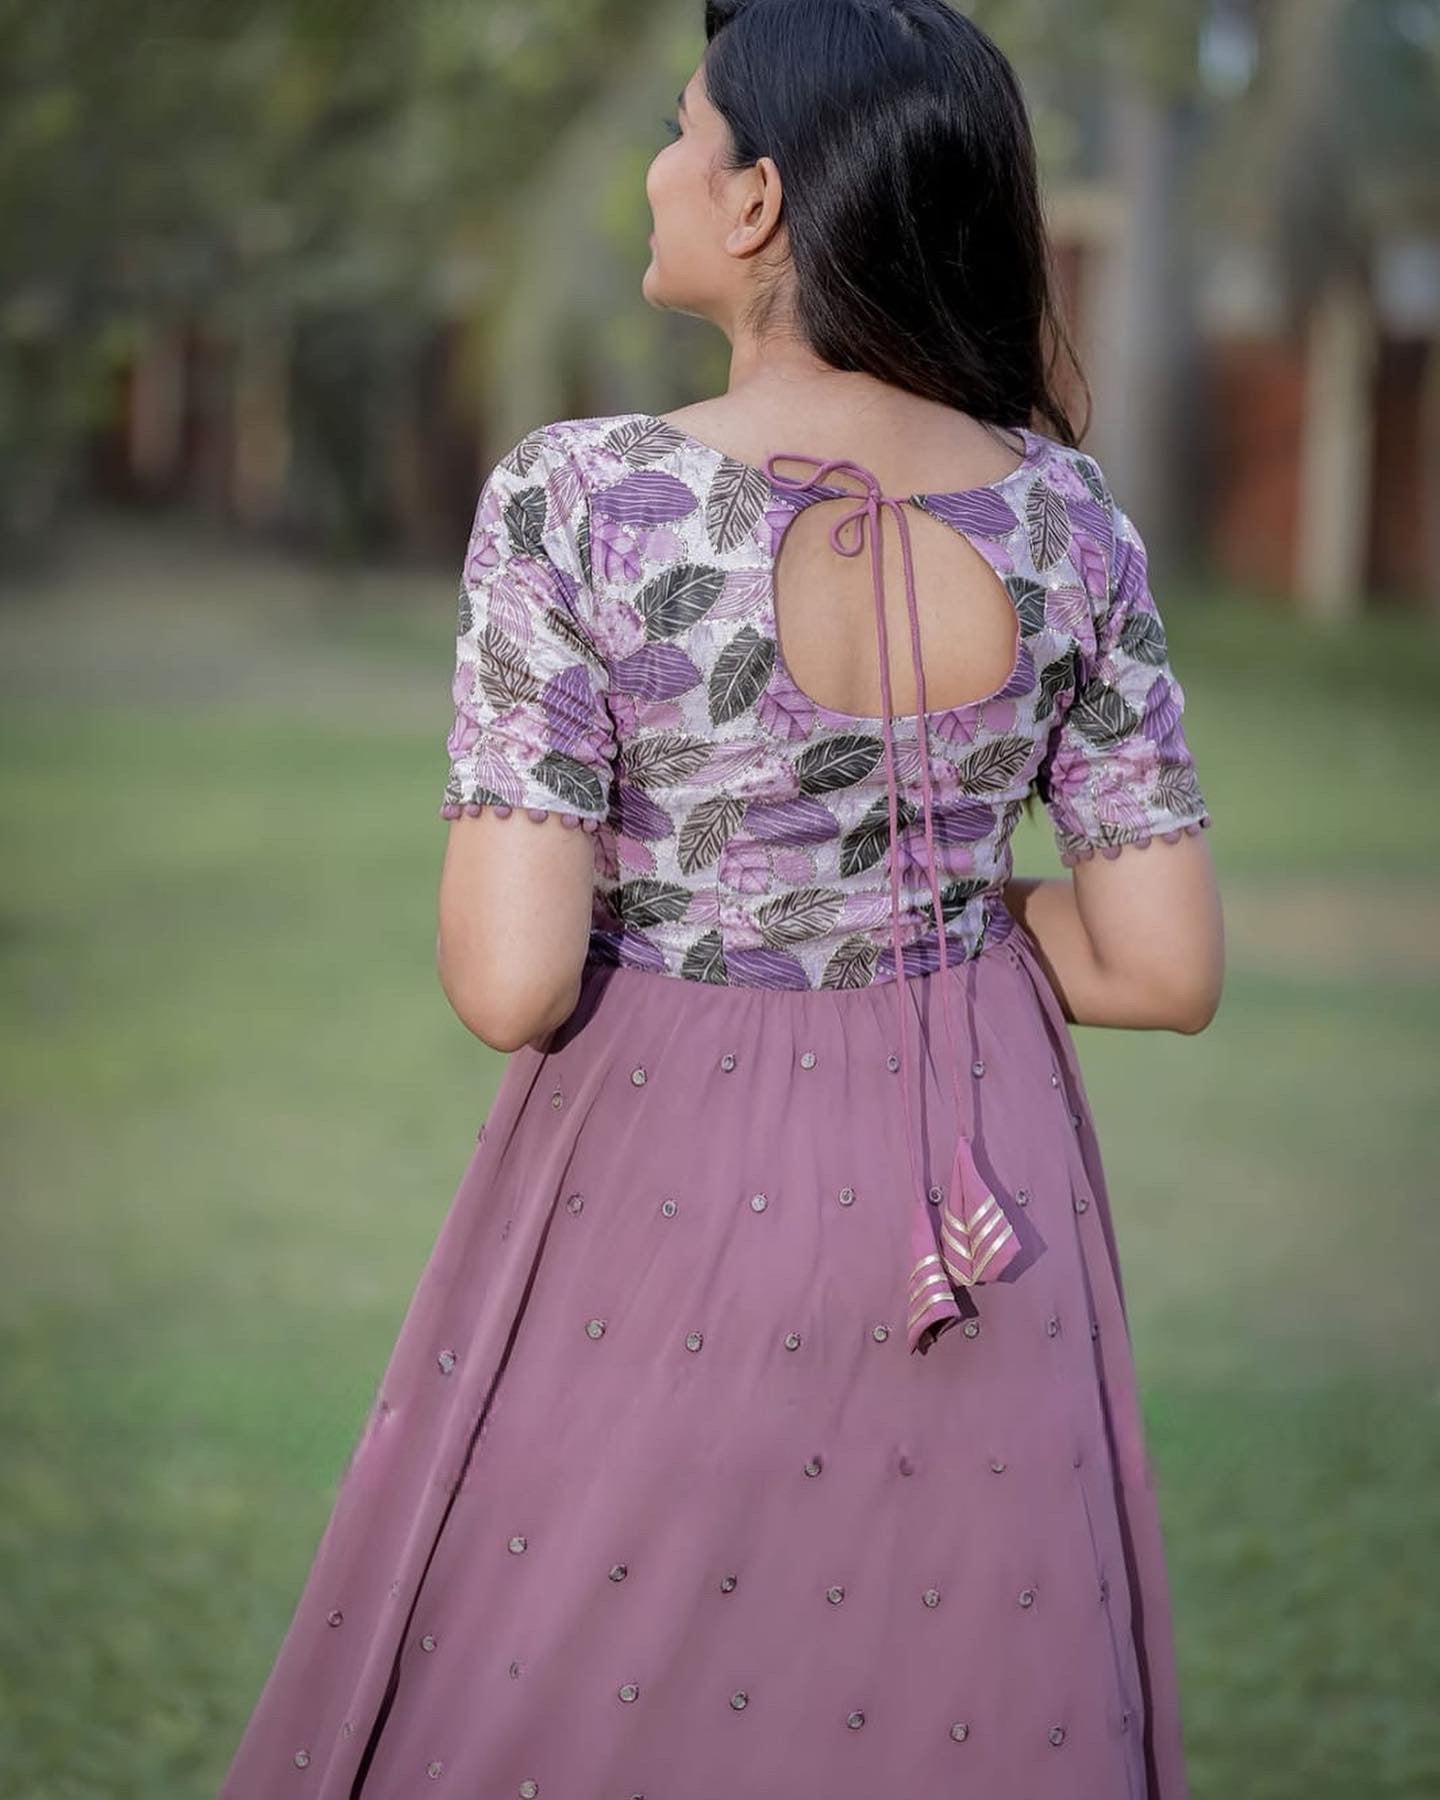 nejadhari tax Anarkali Gown Price in India  Buy nejadhari tax Anarkali Gown  online at Flipkartcom